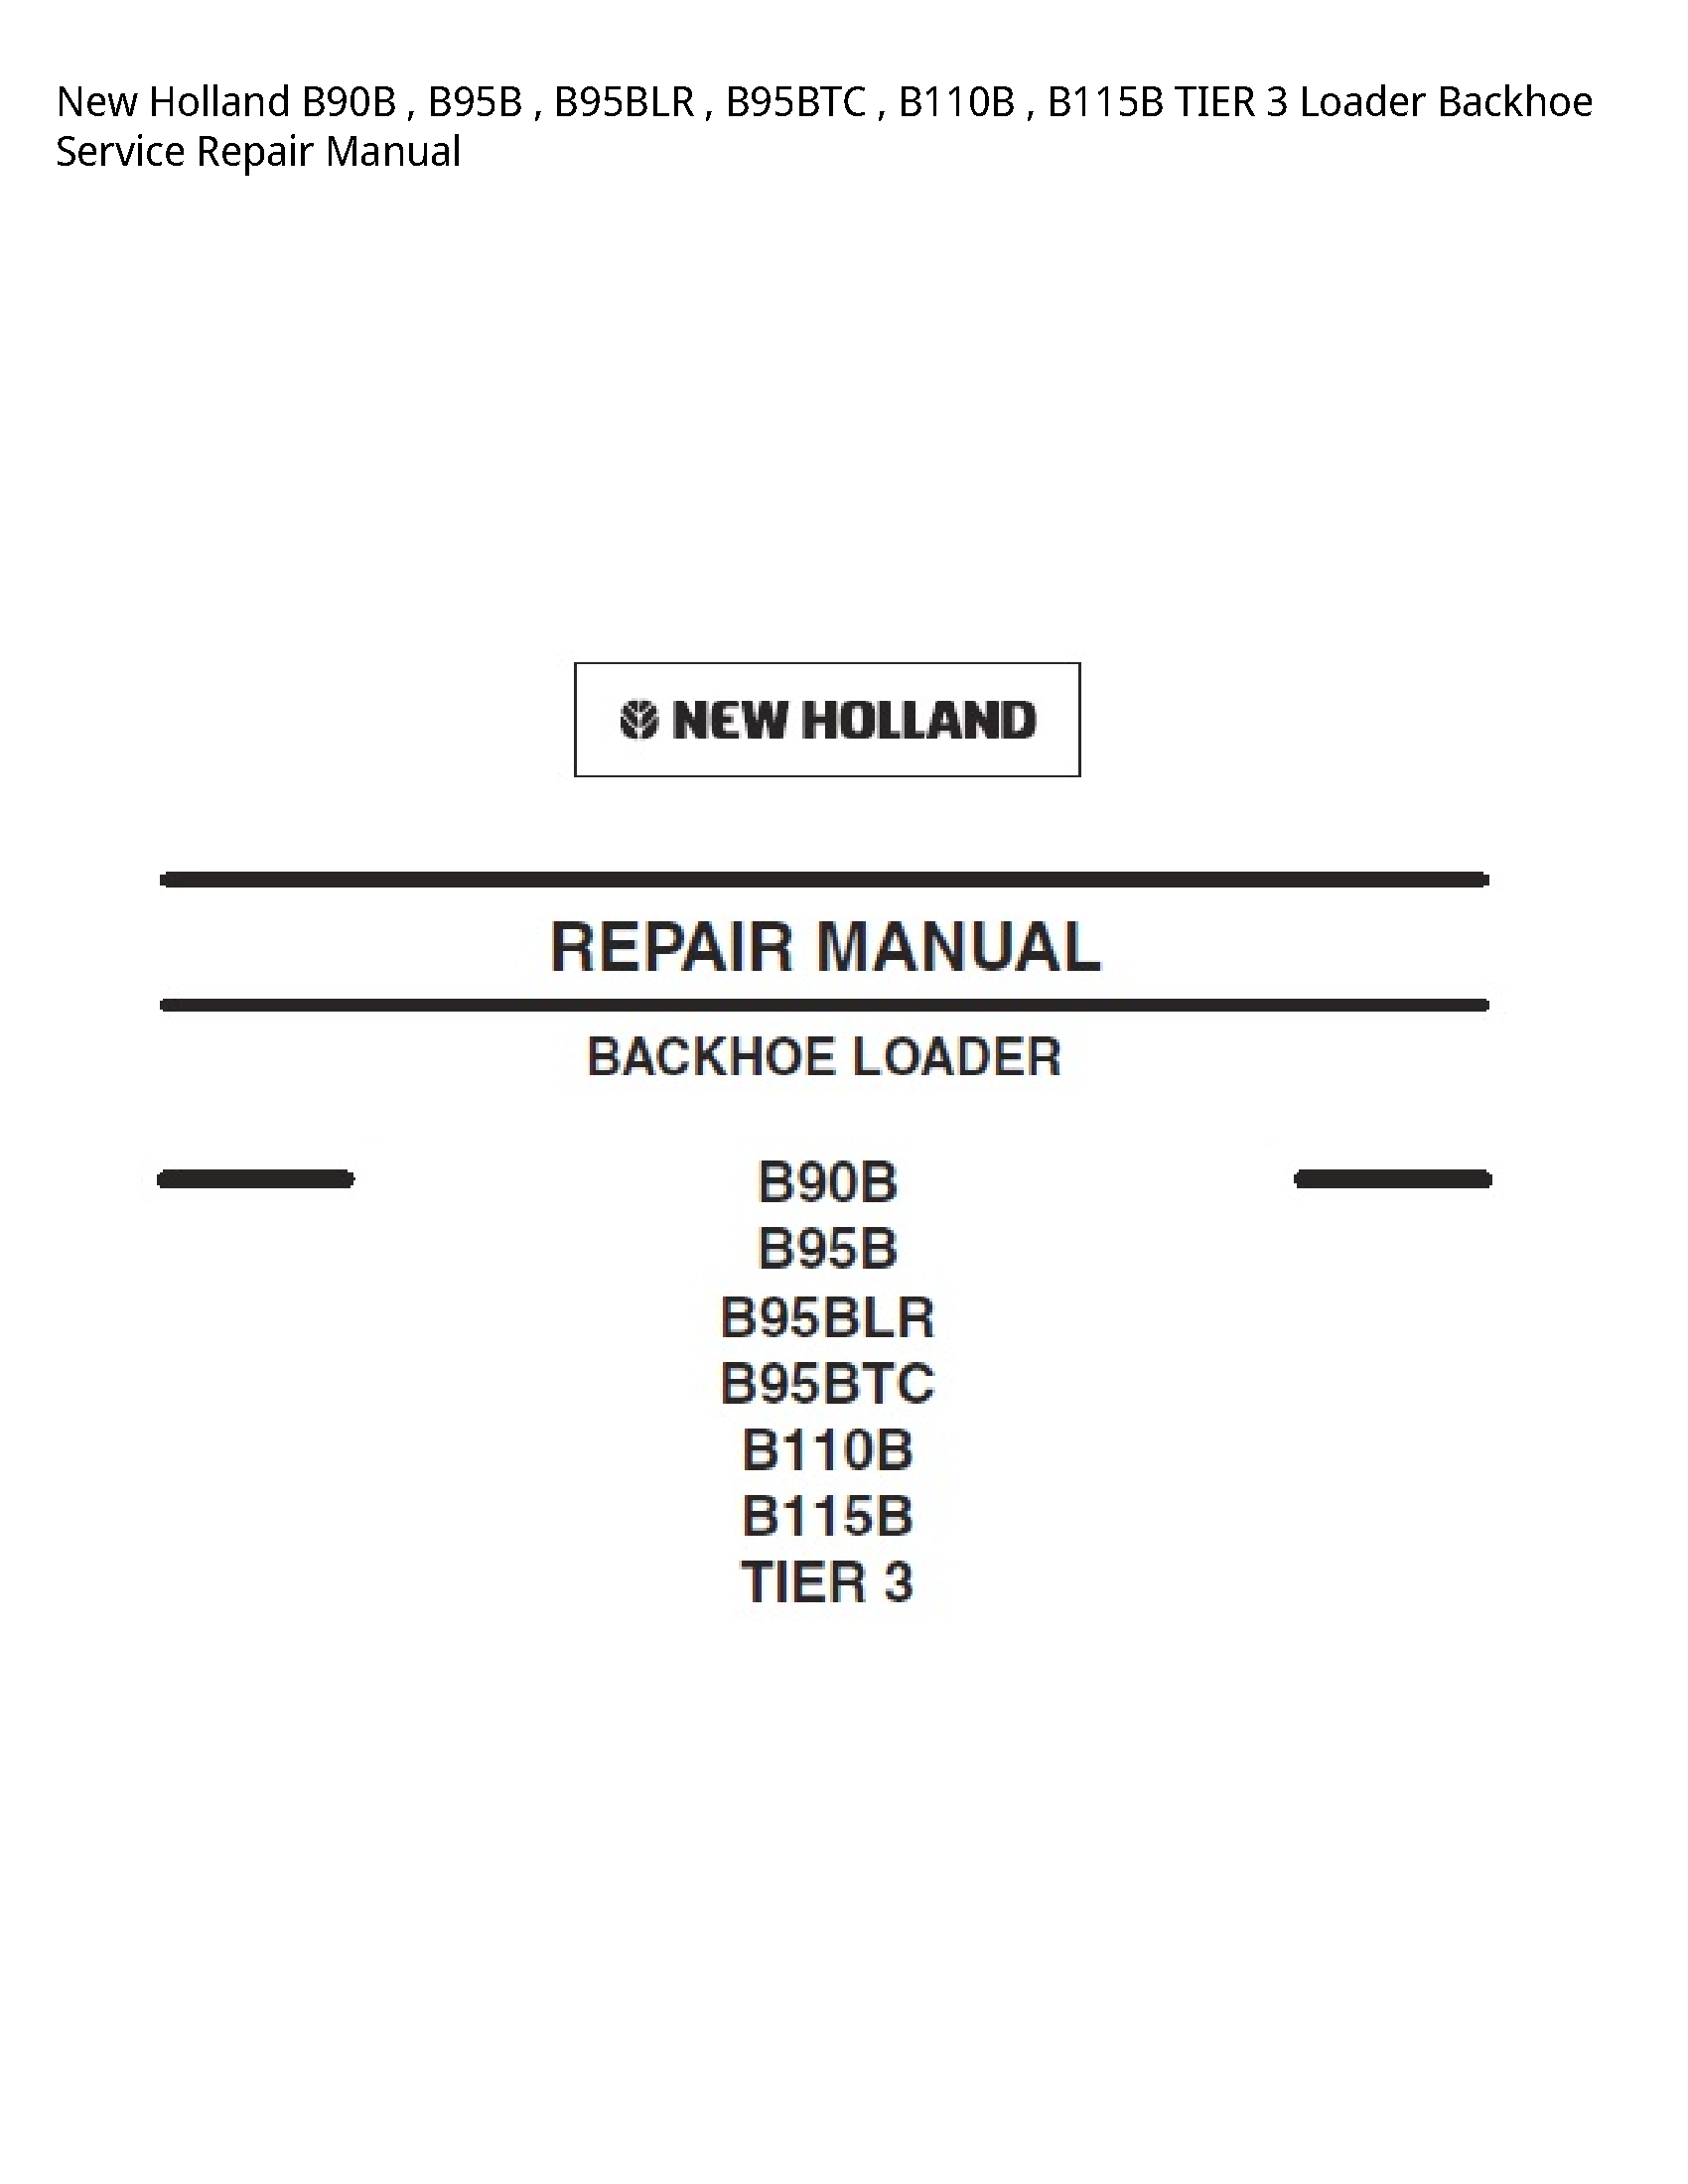 New Holland B90B TIER Loader Backhoe manual